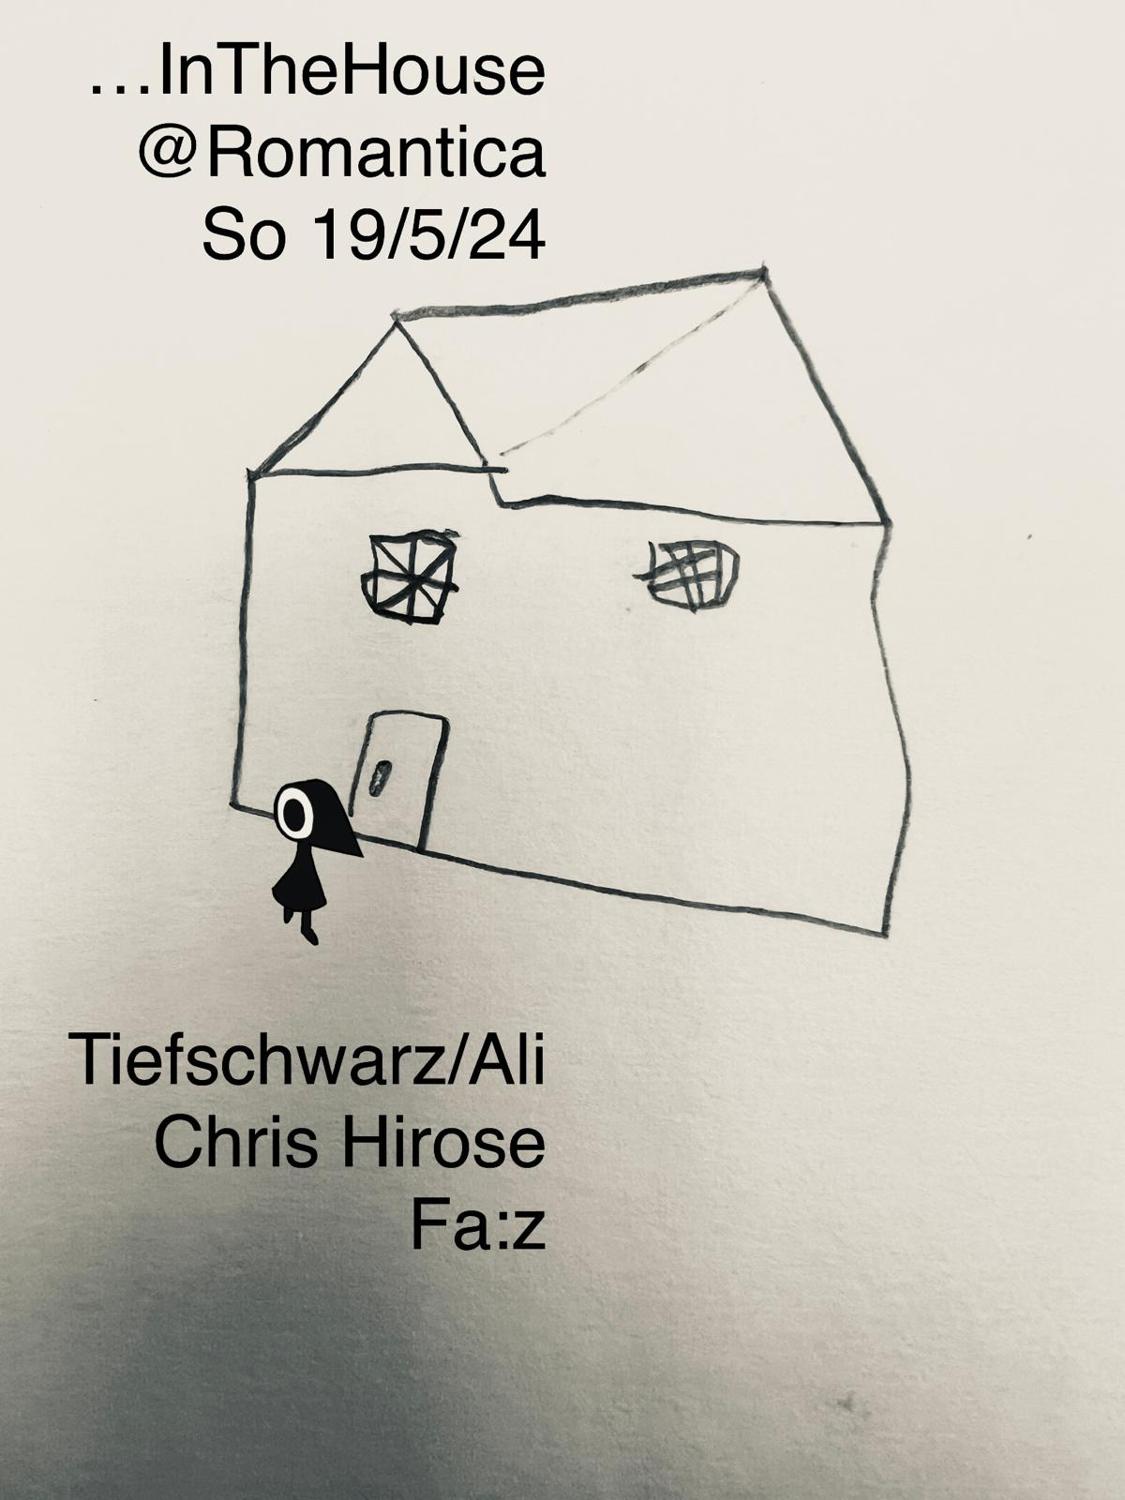 Inthehouse With Tiefschwarz